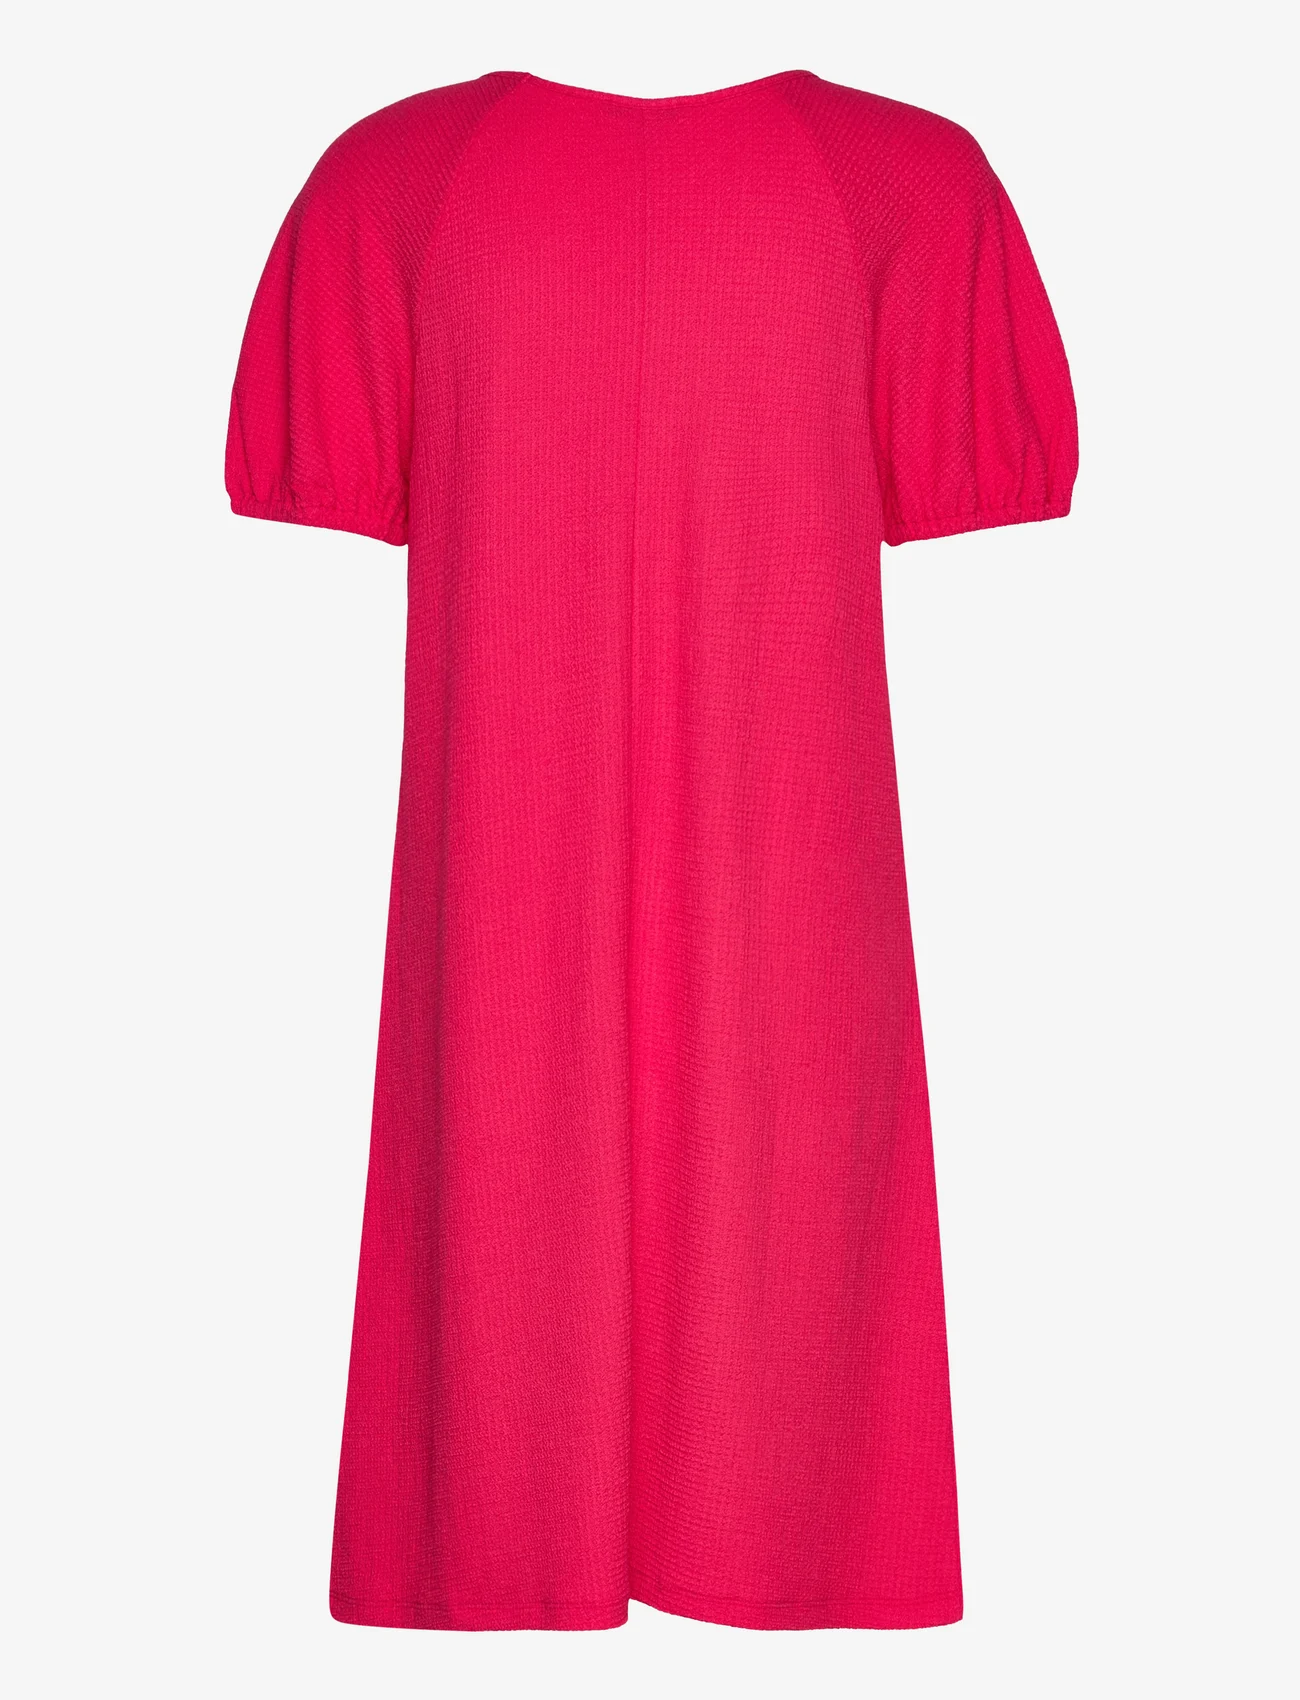 Garcia - ladies dress - zomerjurken - rouge red - 1